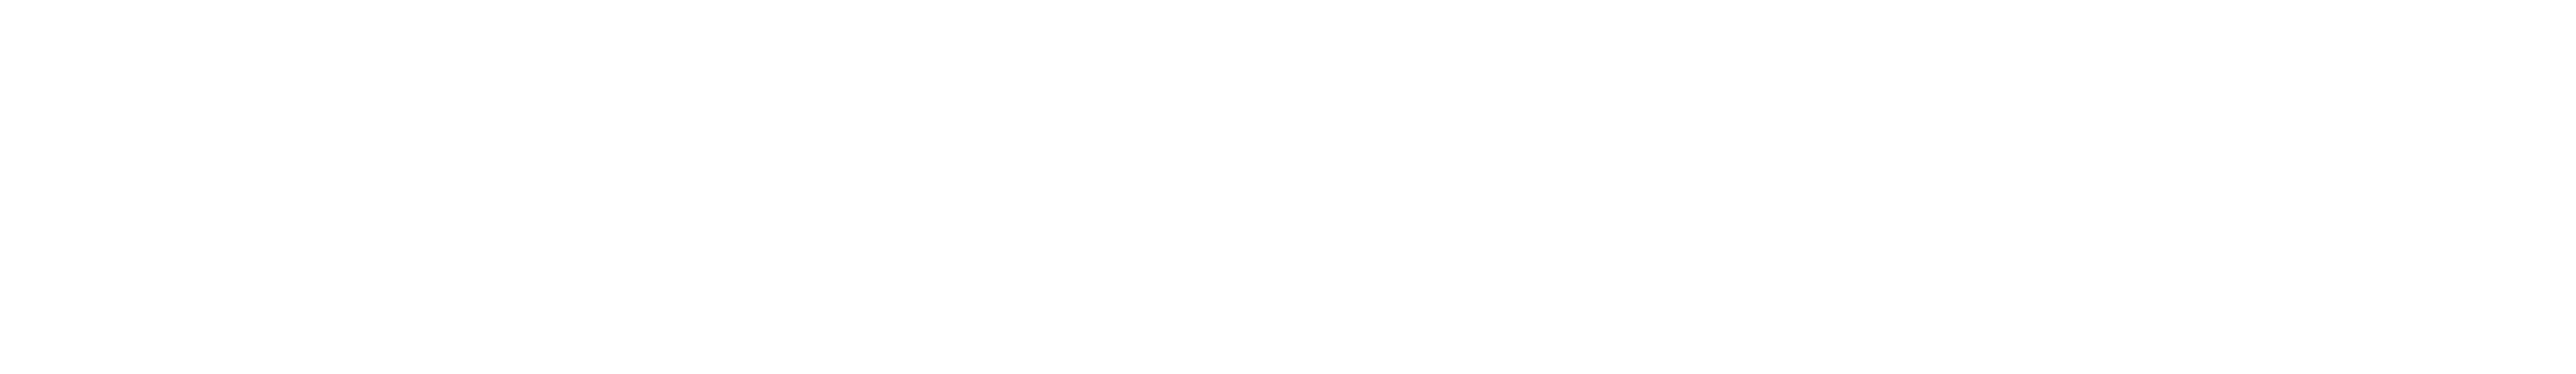 Mosko Digital - Logo Branca